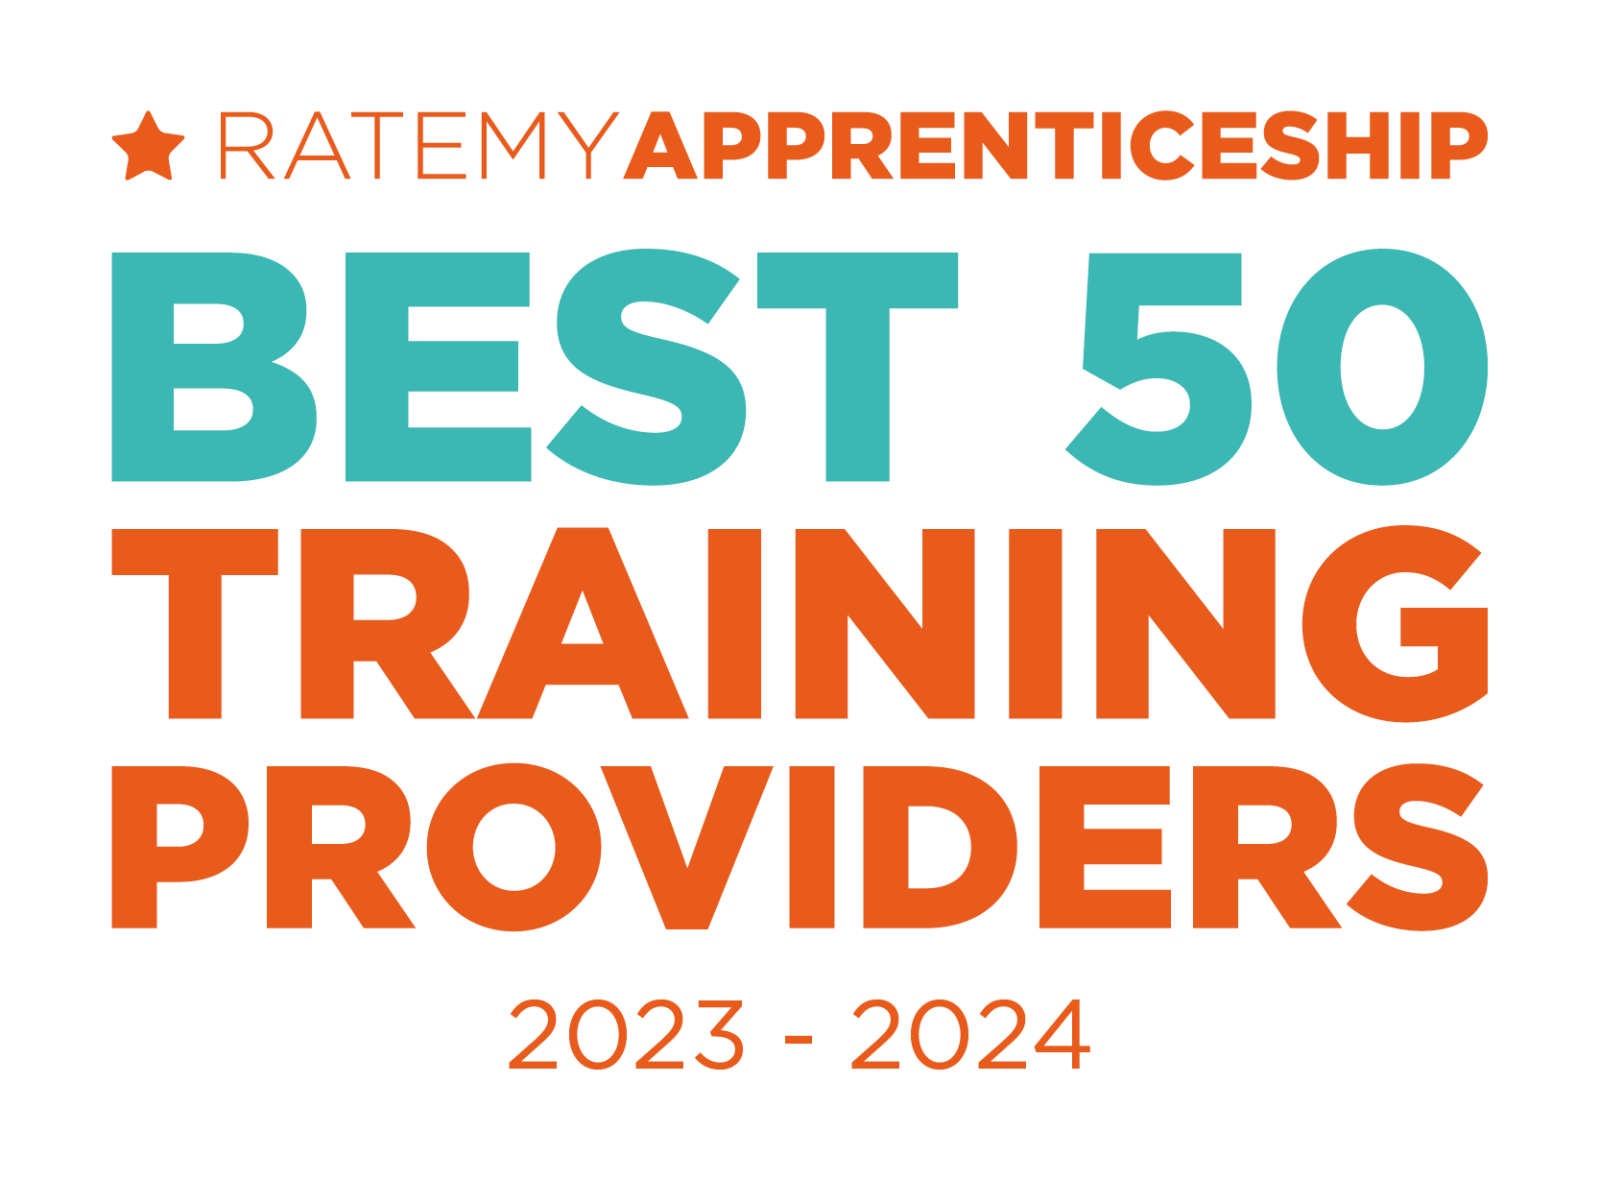 Rate-my-apprenticeship-best-50-training providers-23-24